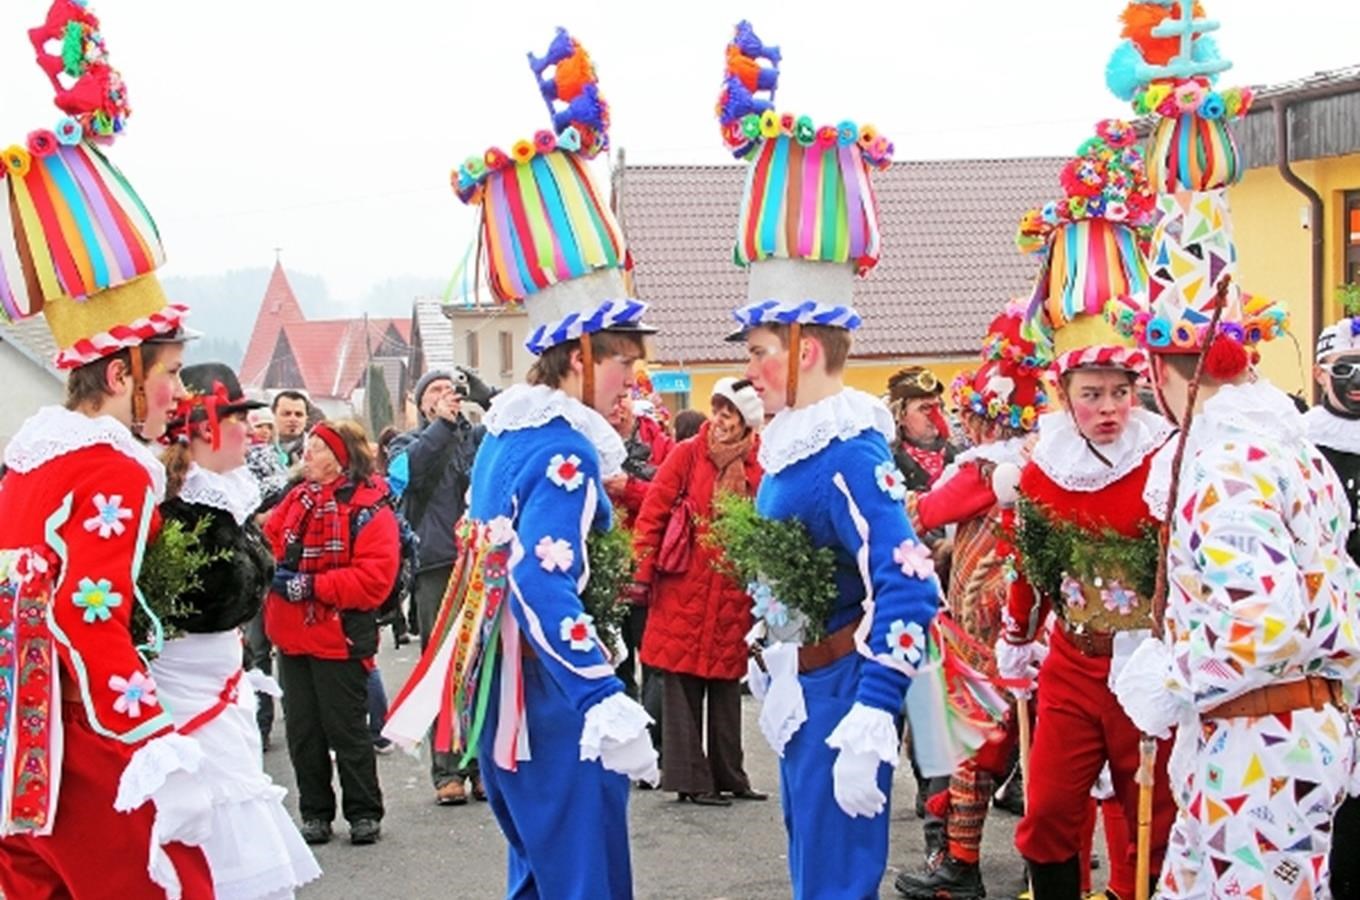 Épinglé sur Masopust, karneval